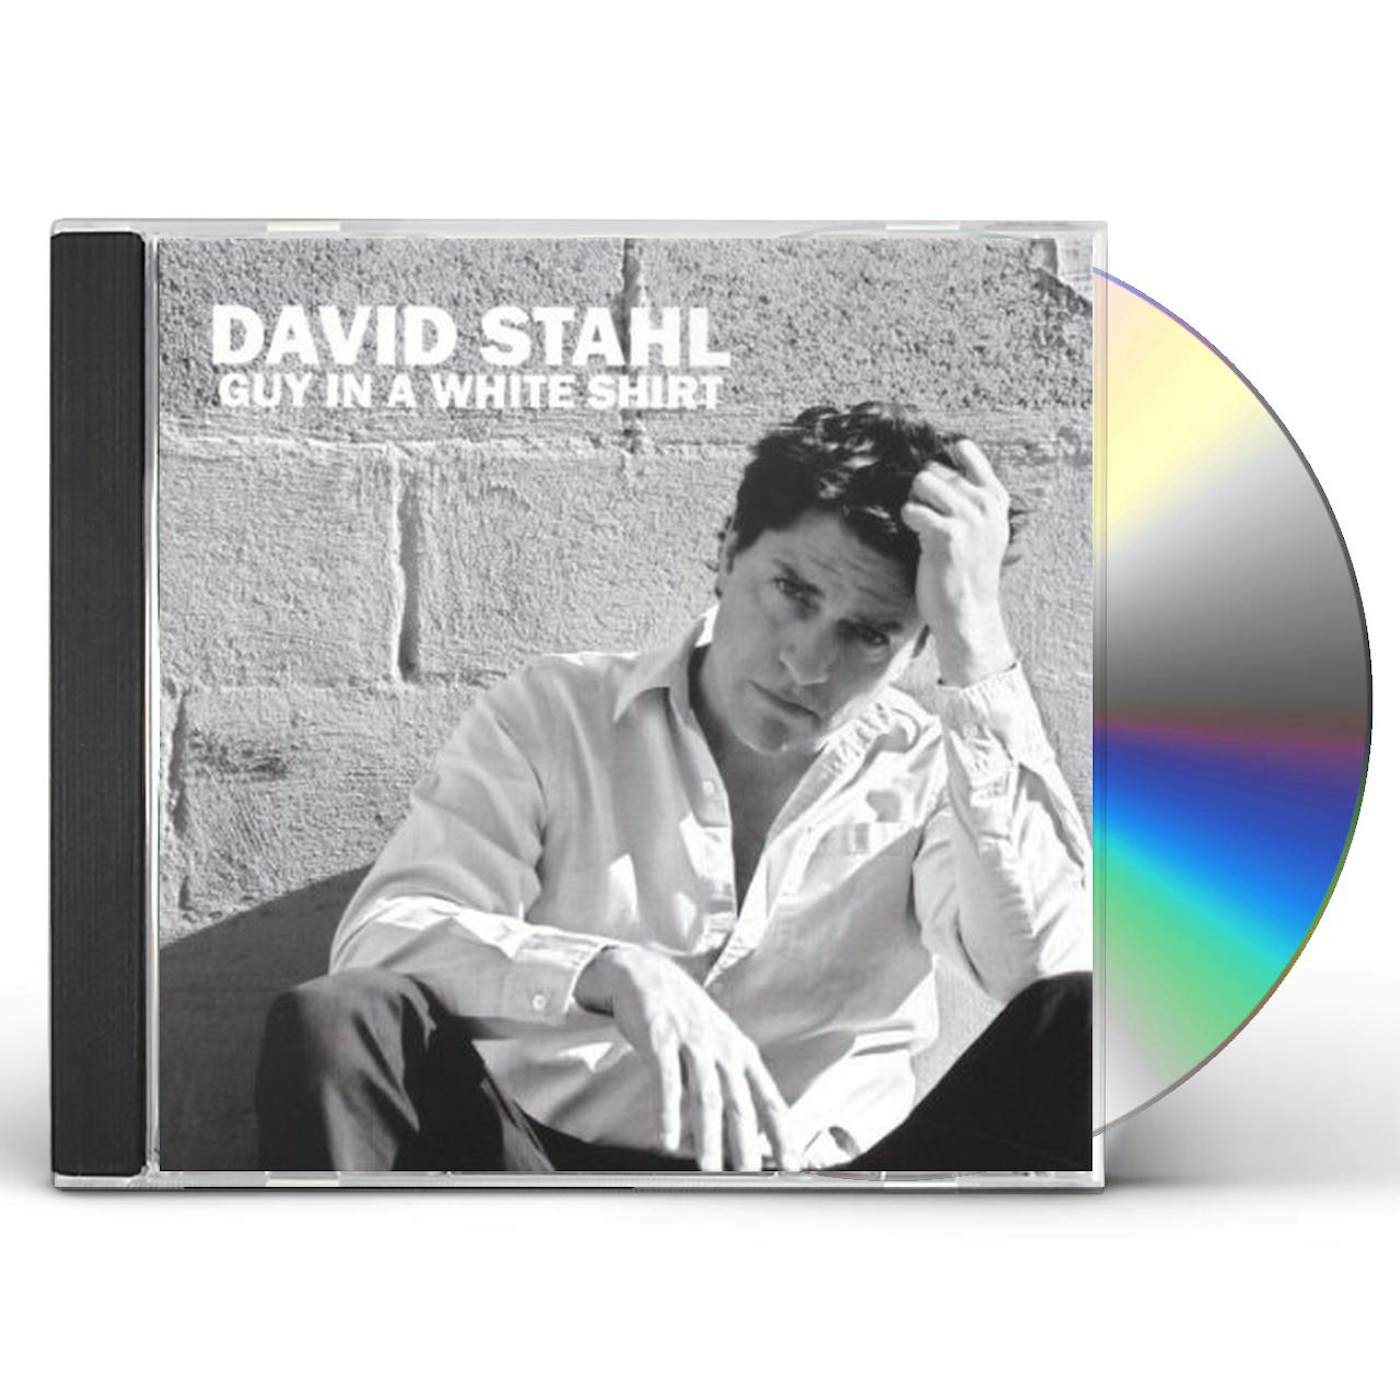 David Stahl GUY IN A WHITE SHIRT CD